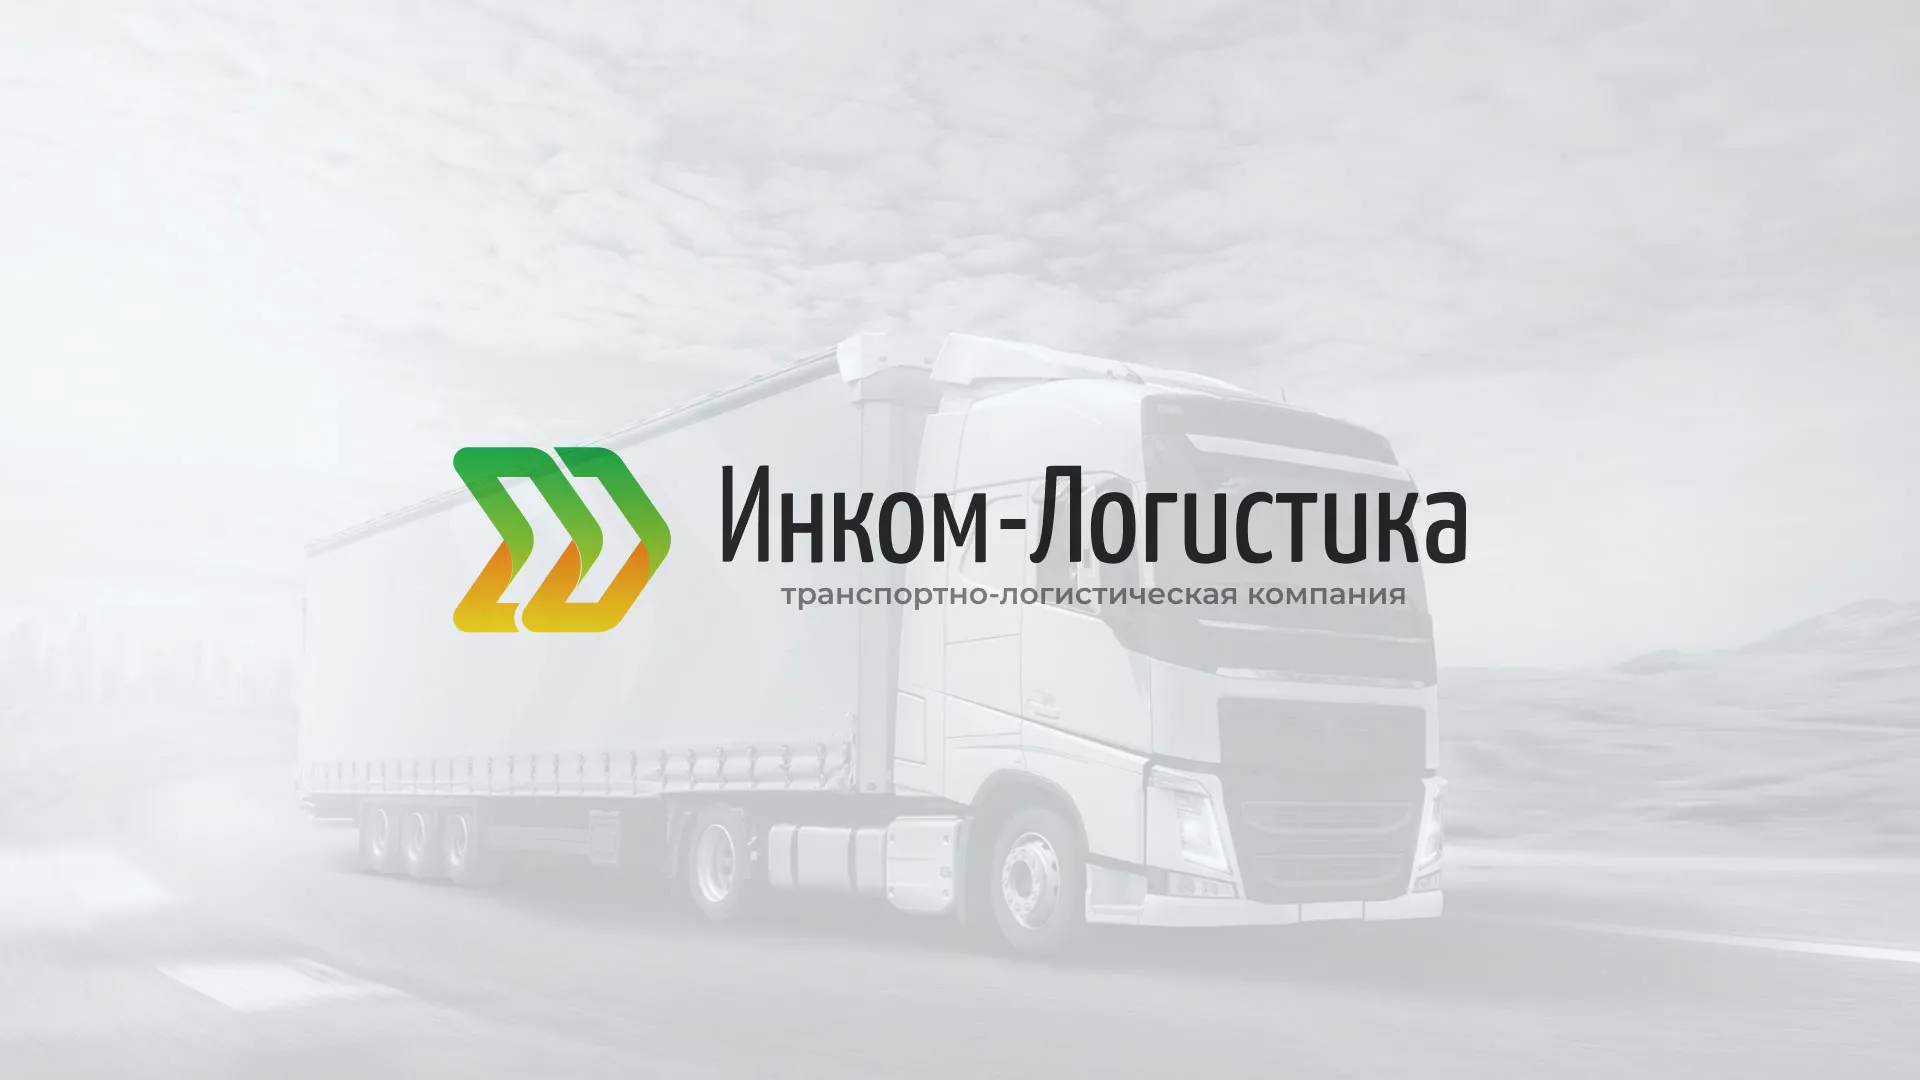 Разработка логотипа и сайта компании «Инком-Логистика» в Петушках